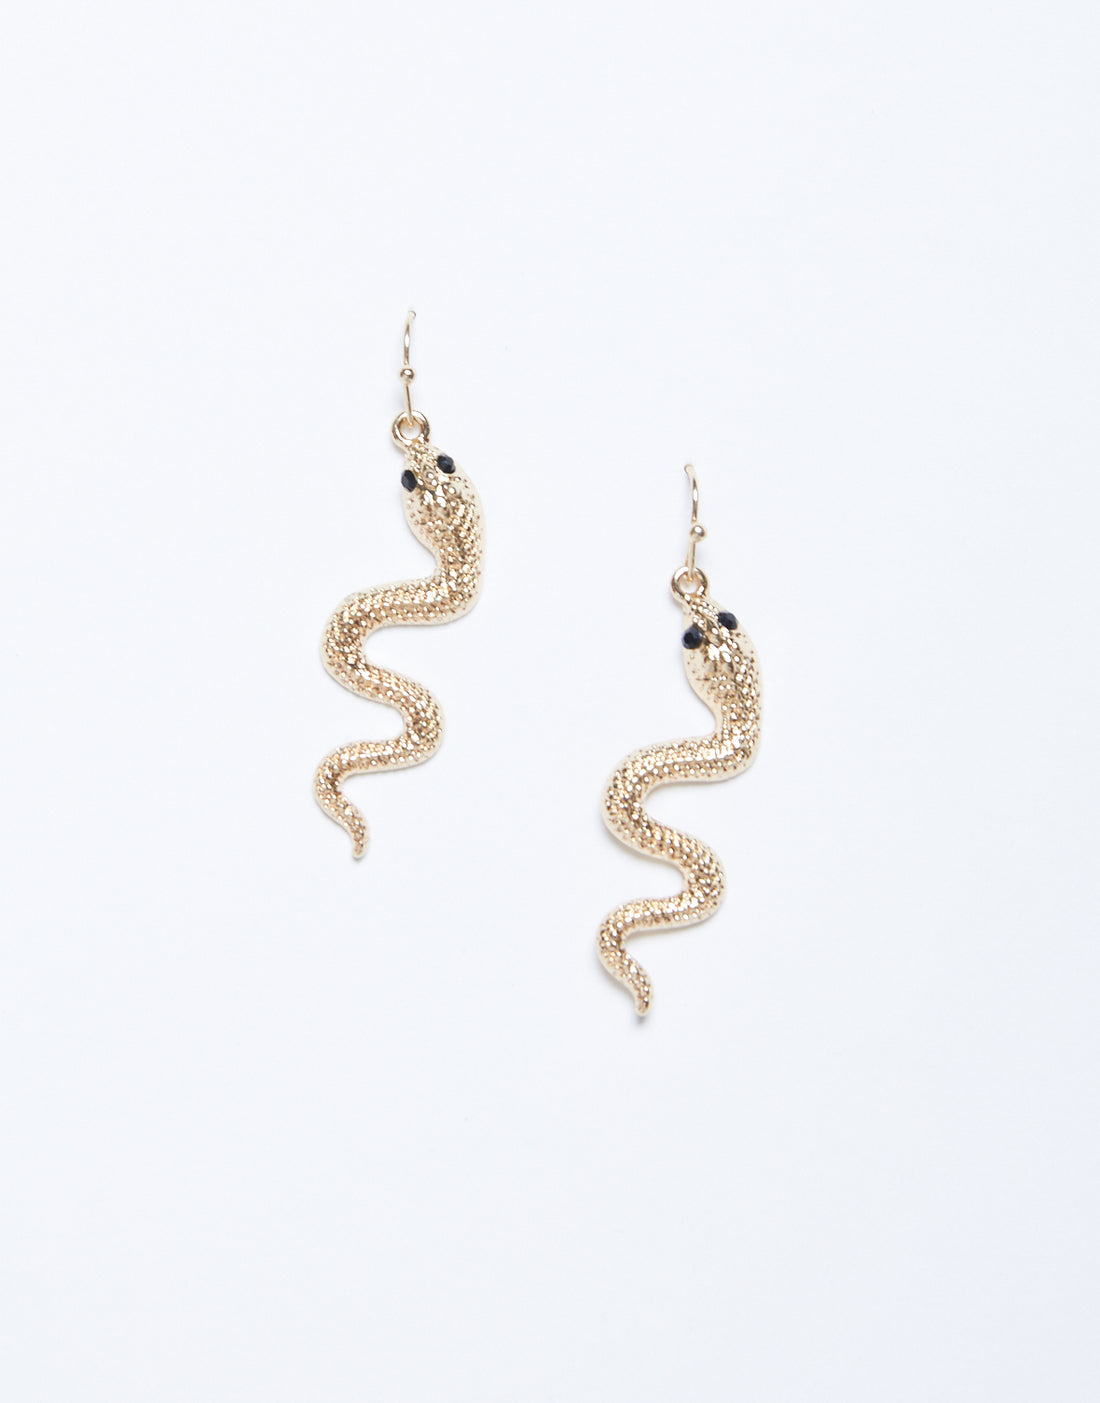 Wavy Snake Earrings Jewelry Gold One Size -2020AVE